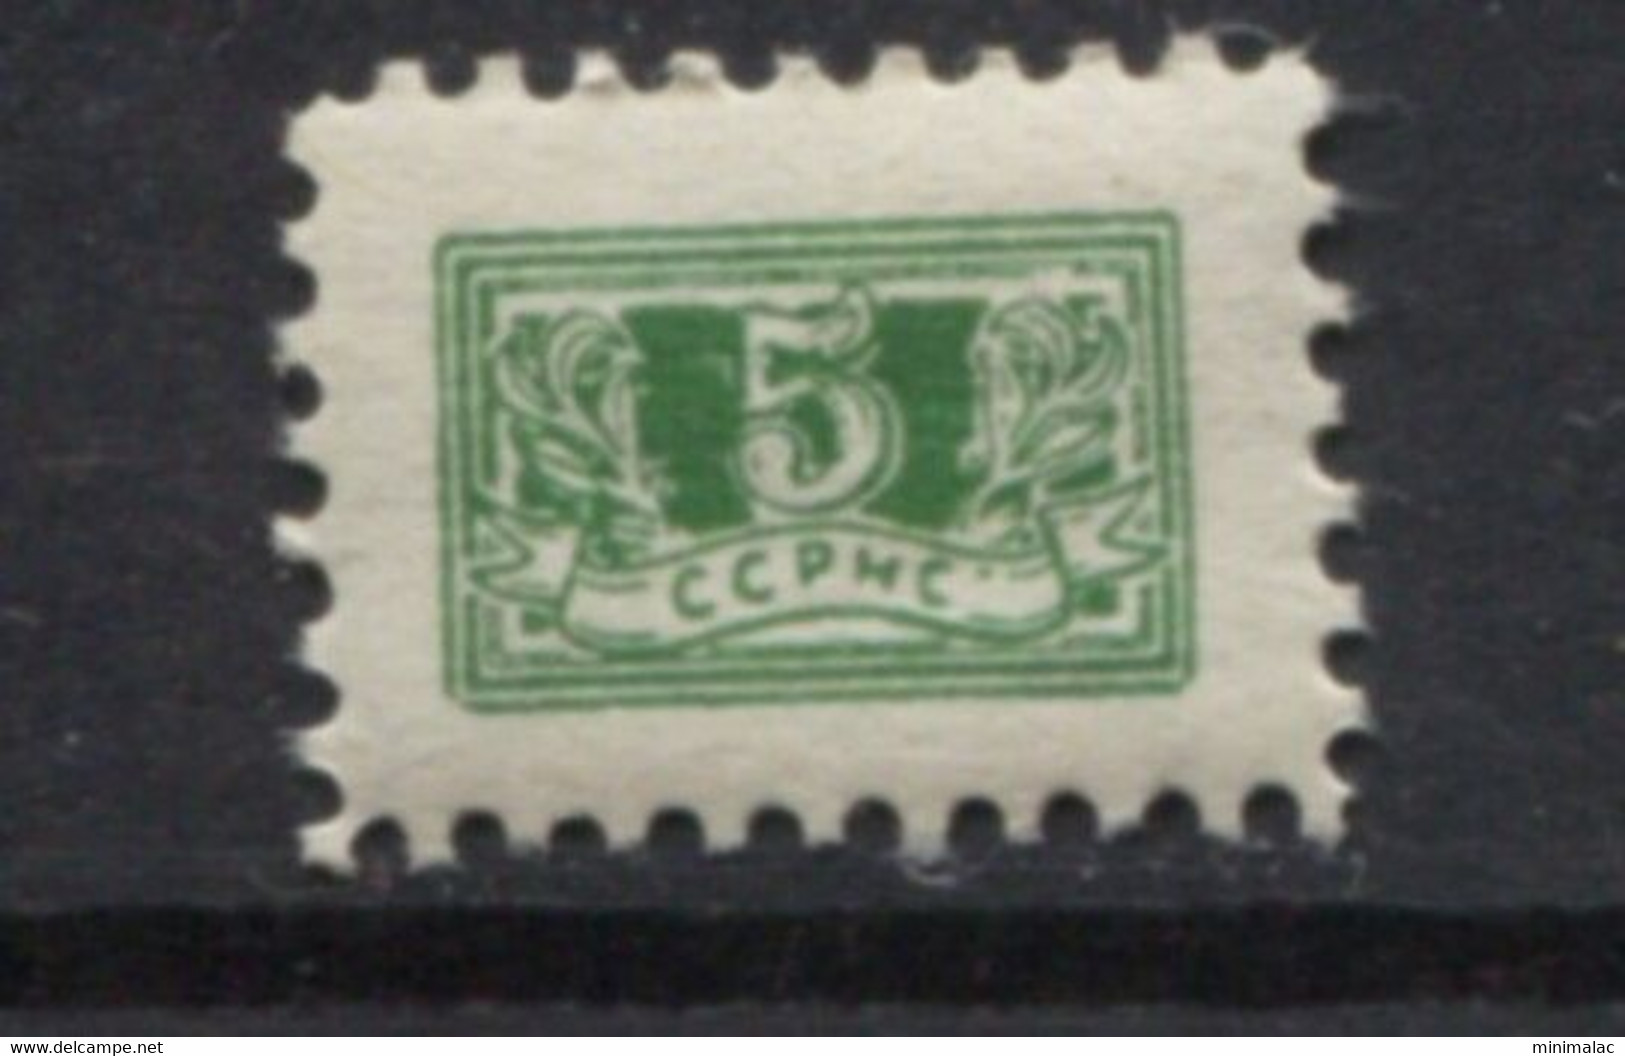 Yugoslavia 1956, Stamp For Membership, SSRNS, Labor Union, Administrative Stamp - Revenue, Tax Stamp, 5d, MNH - Dienstzegels